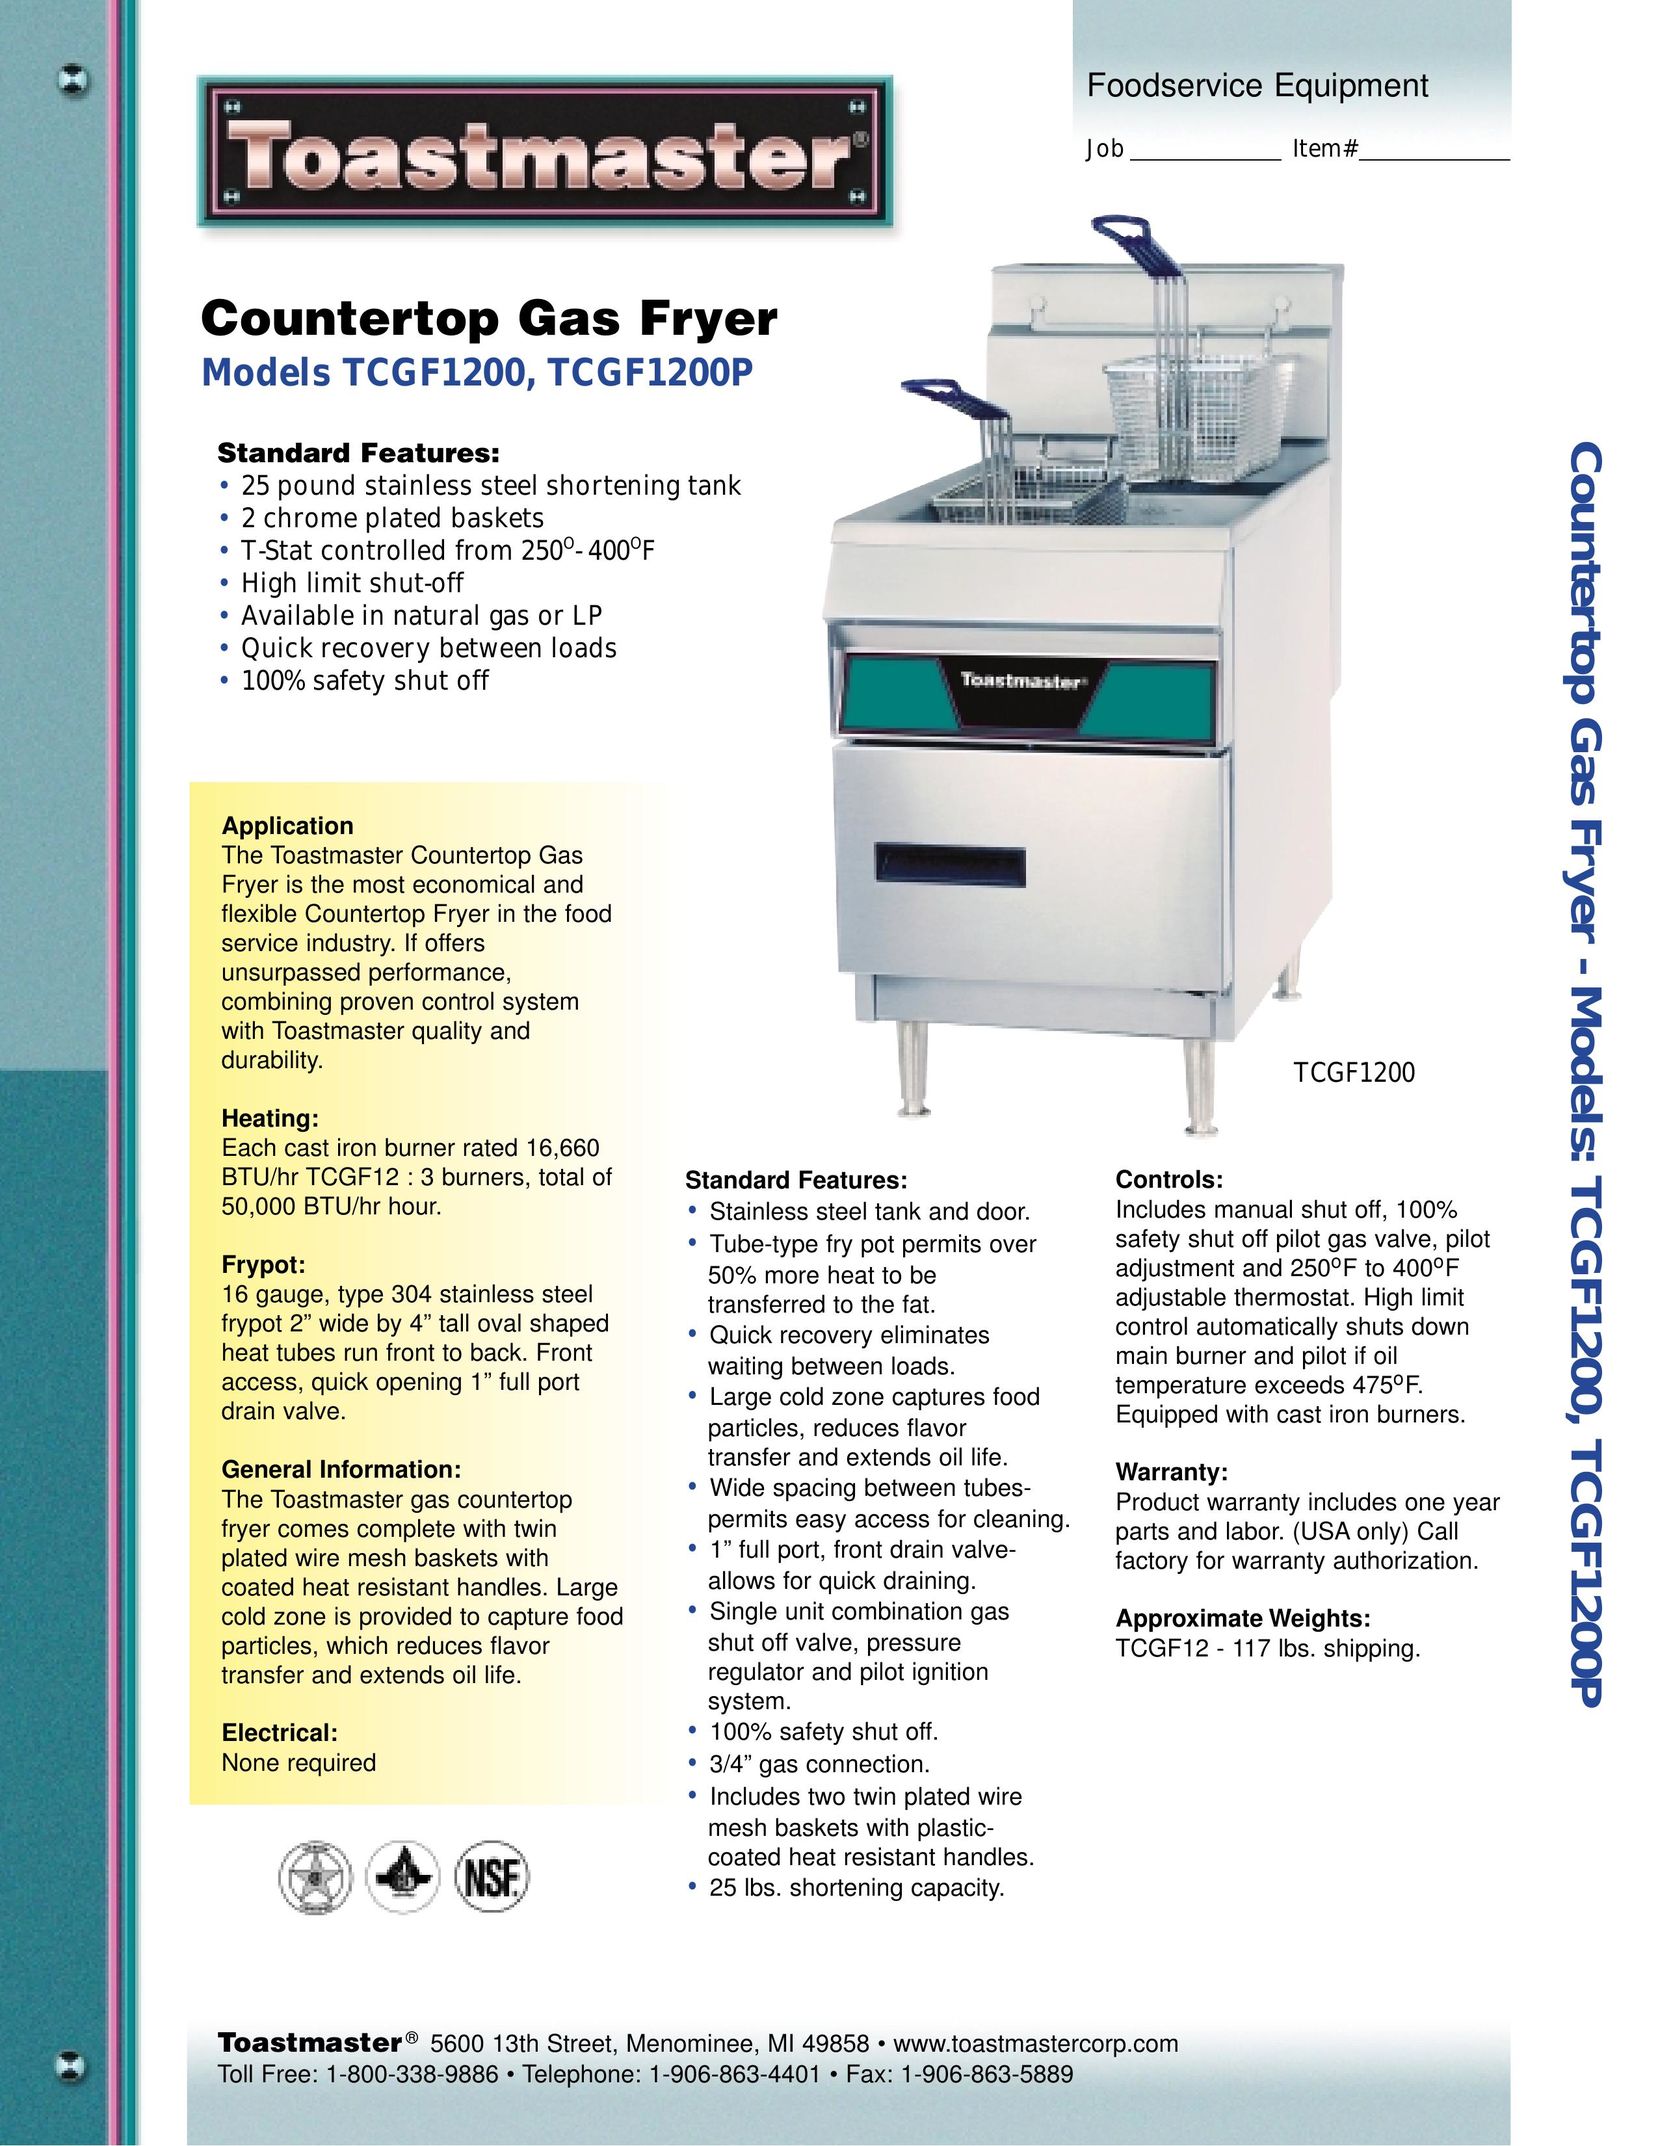 Toastmaster TCGF1200 Fryer User Manual